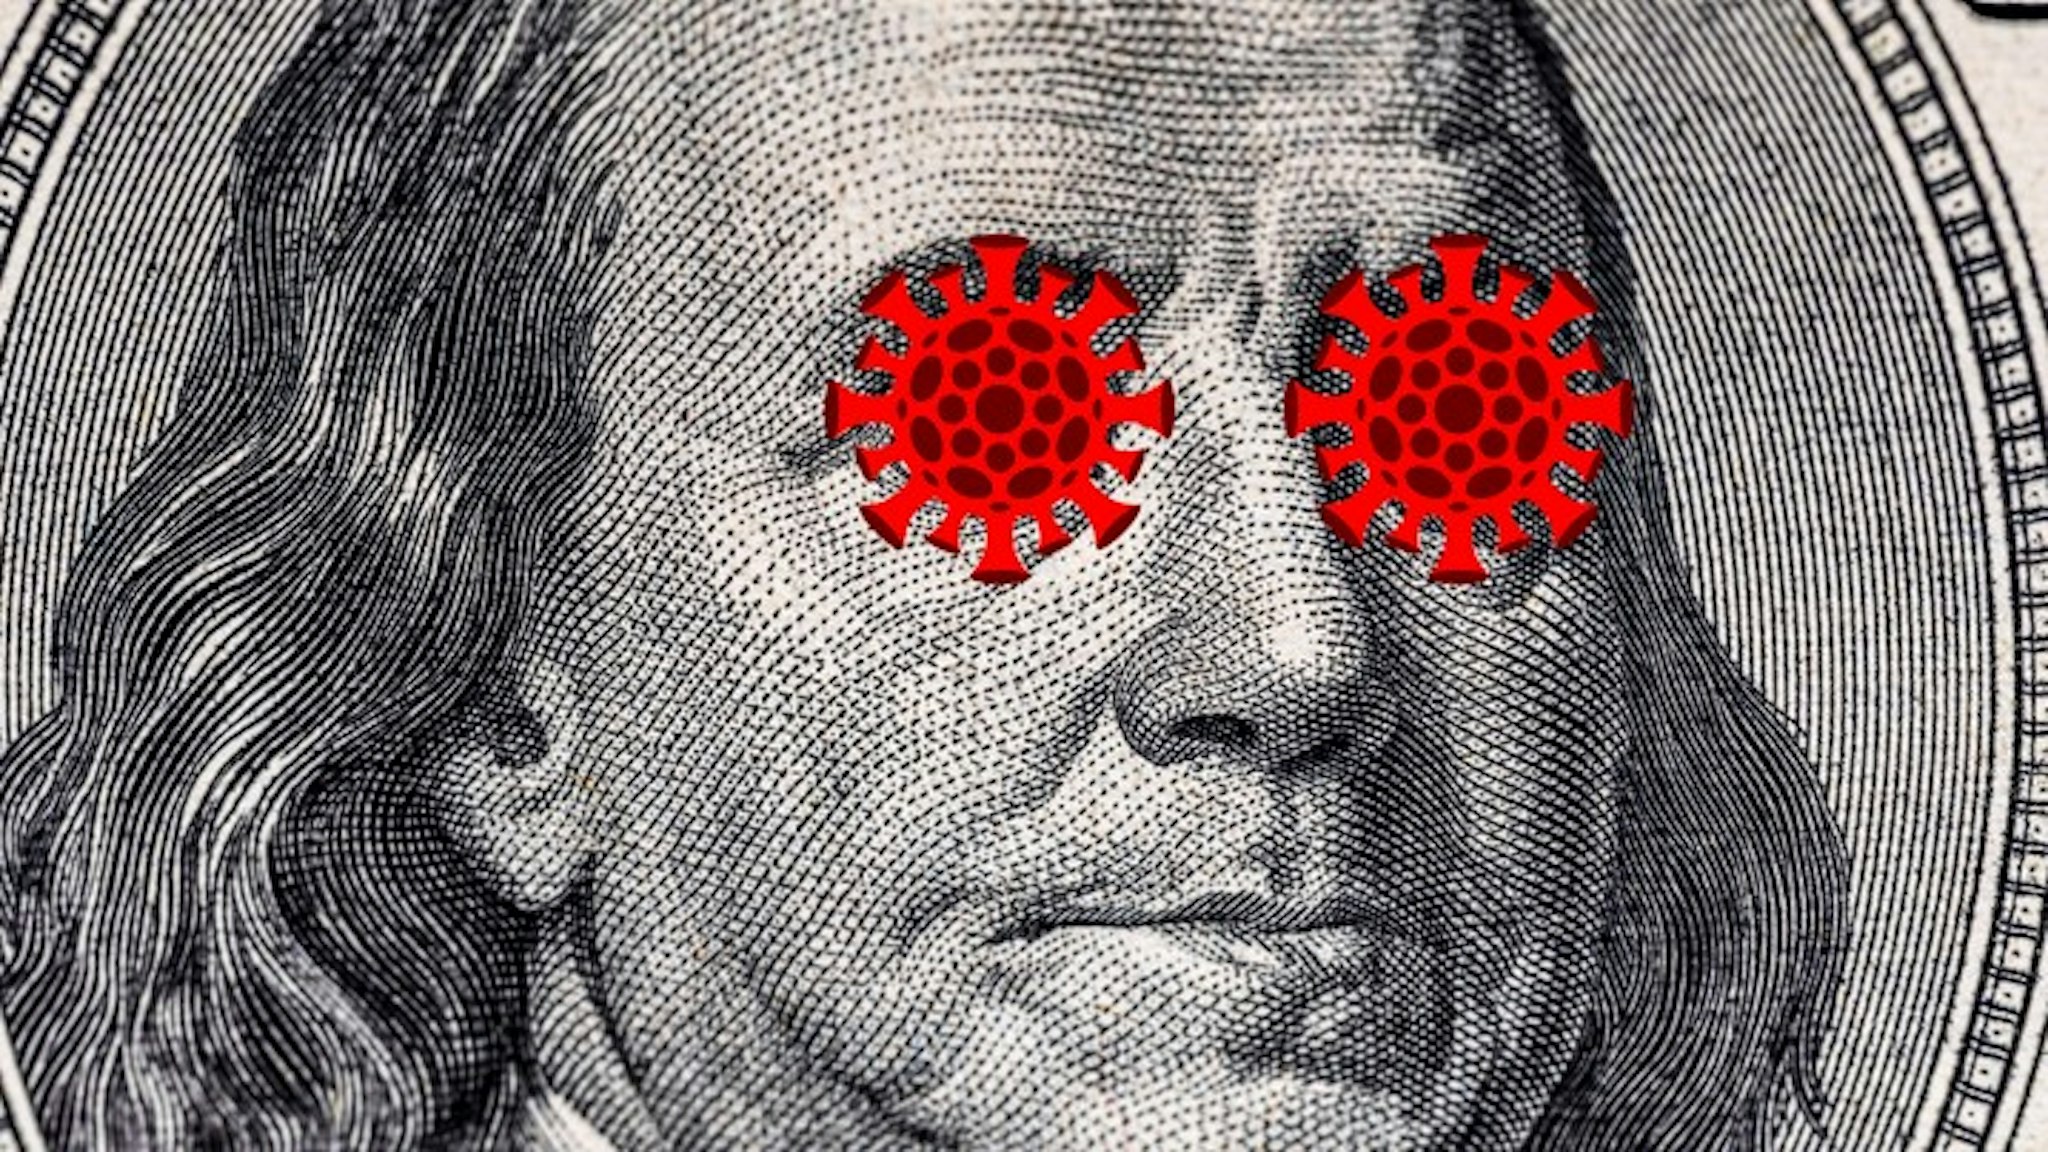 US quarantine, 100 dollar banknote coronavirus. The concept of pandemic and economic decline